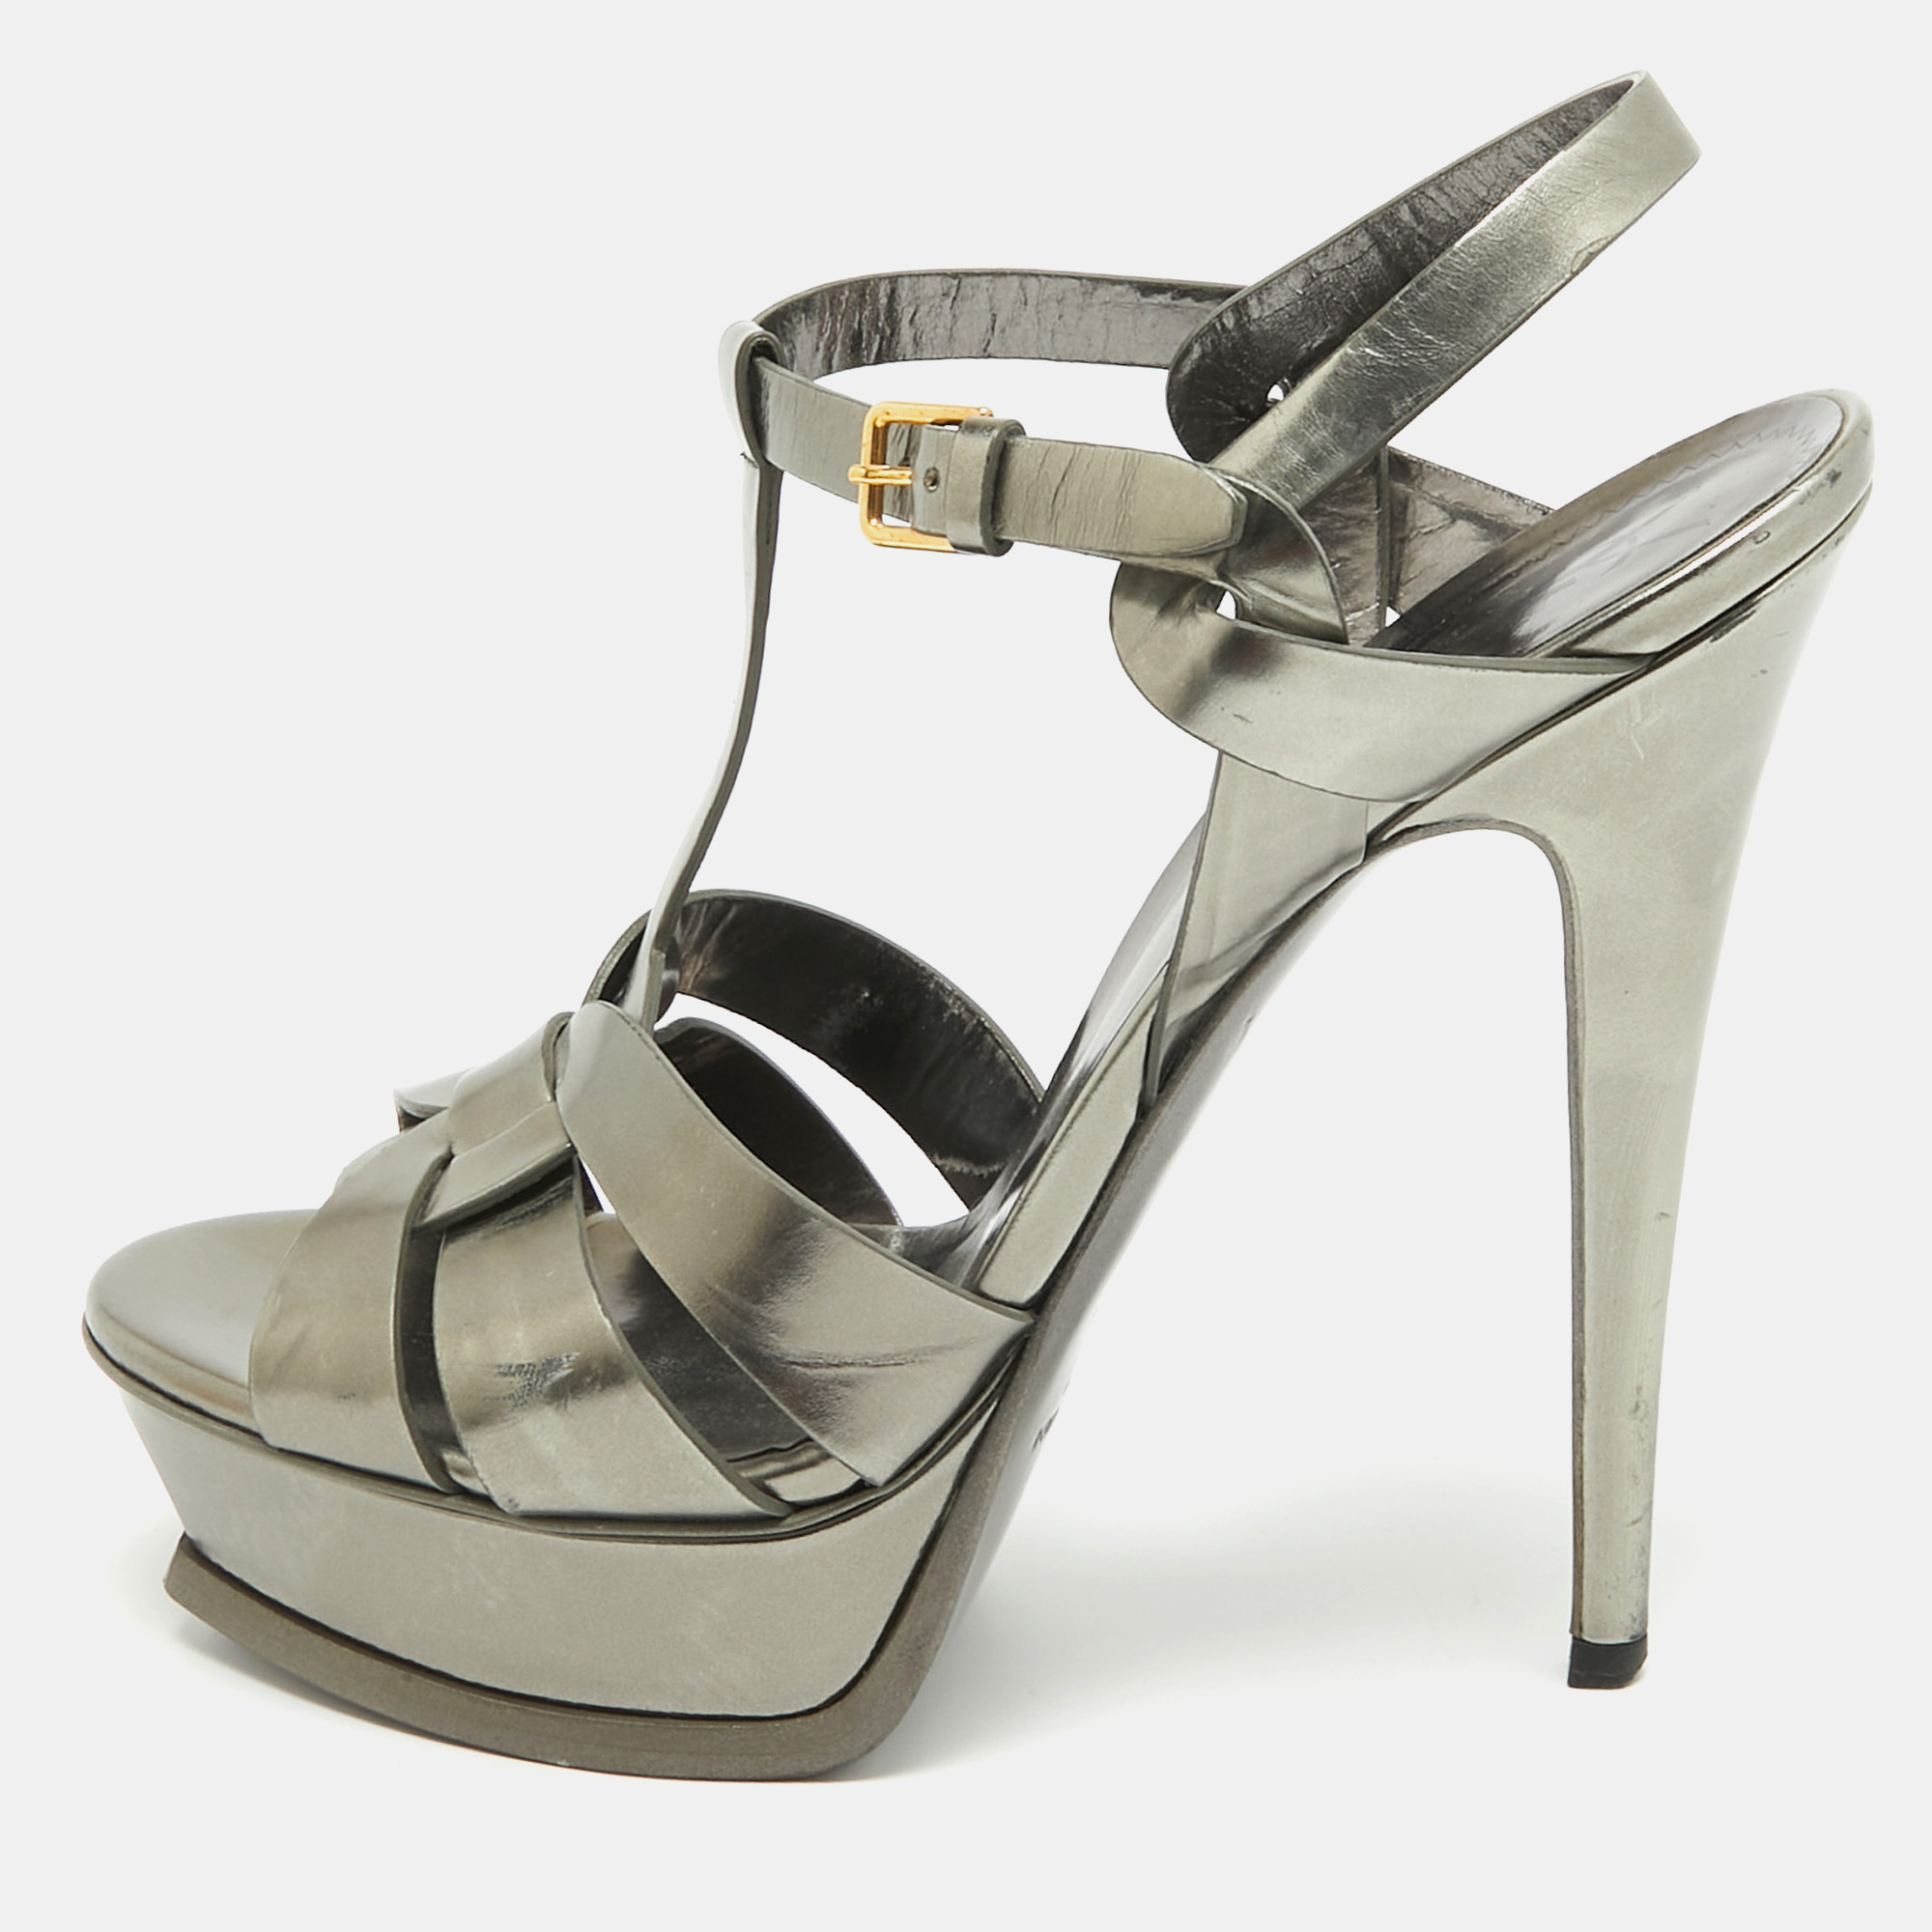 Yves saint laurent metallic grey leather tribute sandals size 39